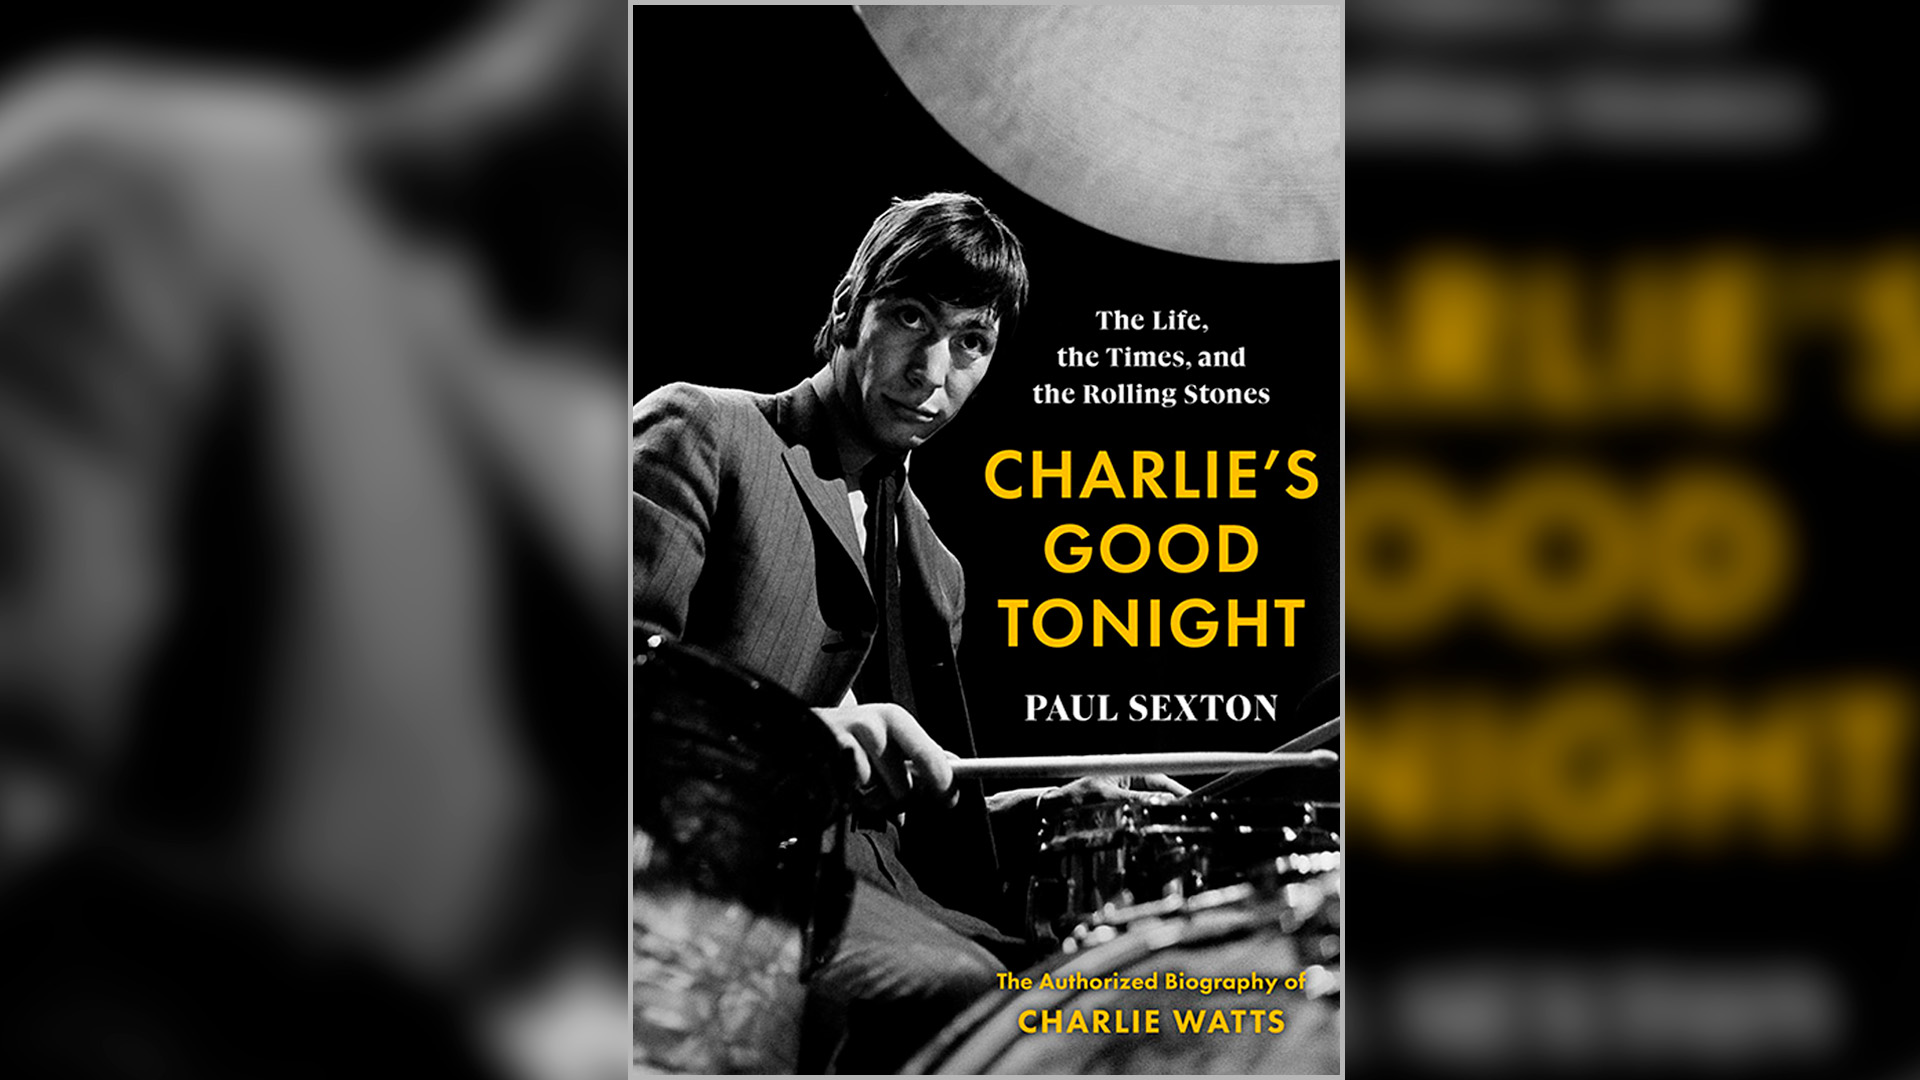 "Charlie’s Good Tonight"